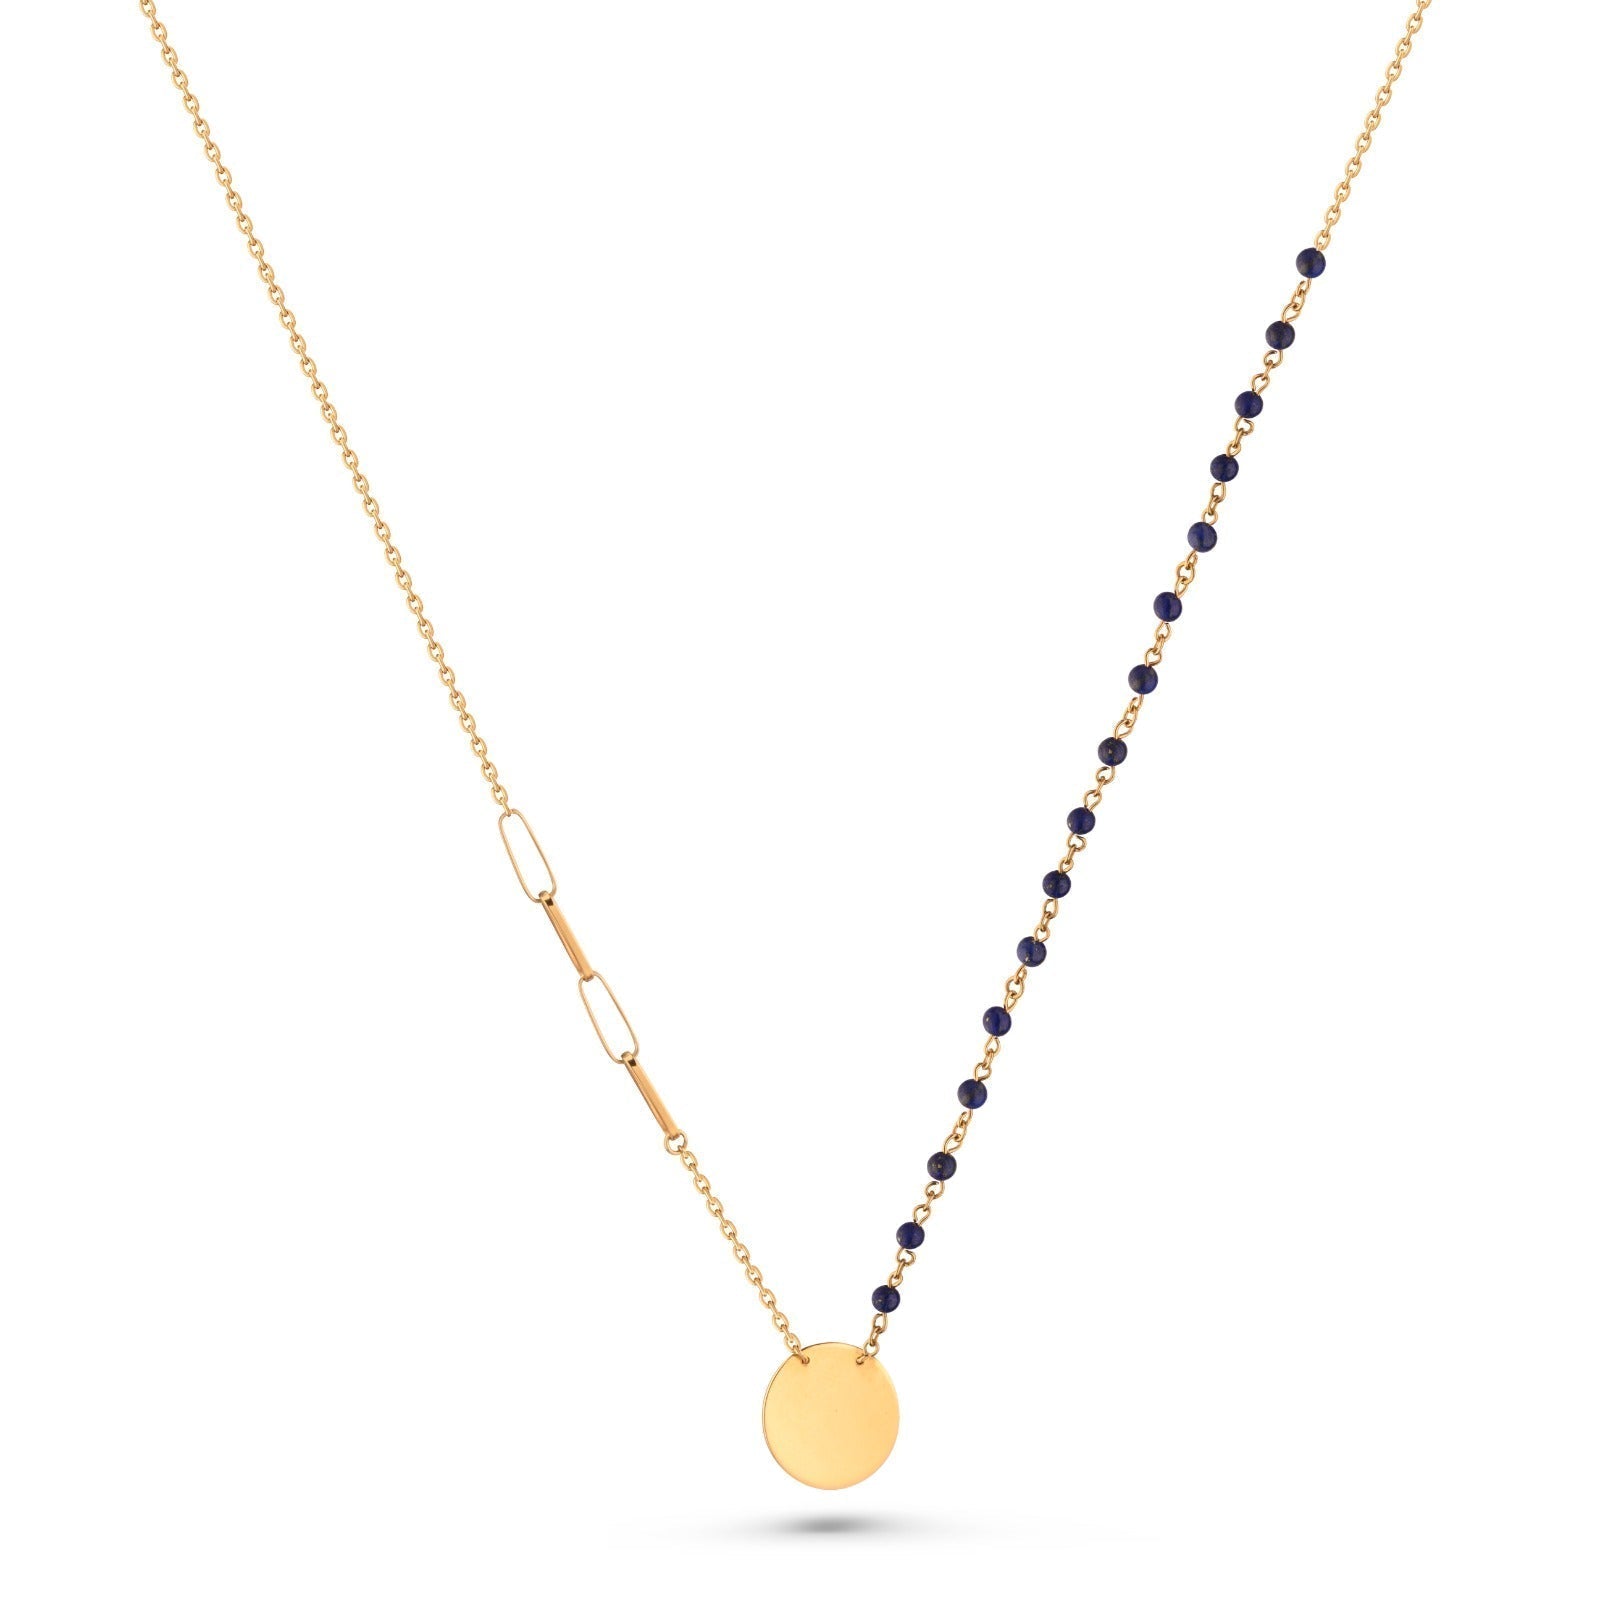 Pretty dangling golden circle Necklace - J-P019A